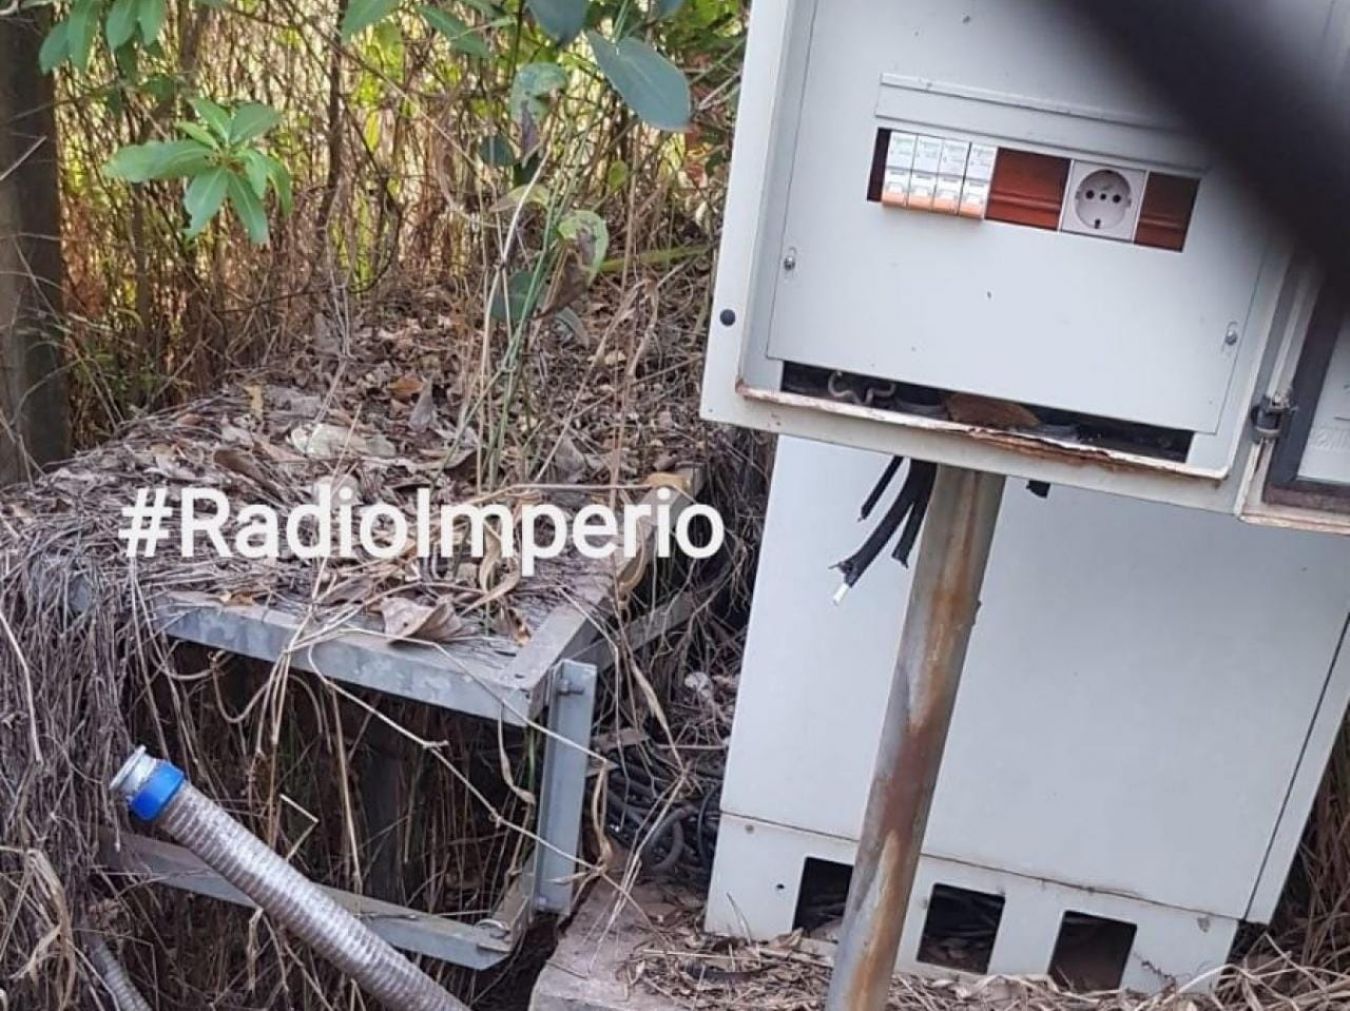 Roban cables de cobre de la radiobase de Copaco